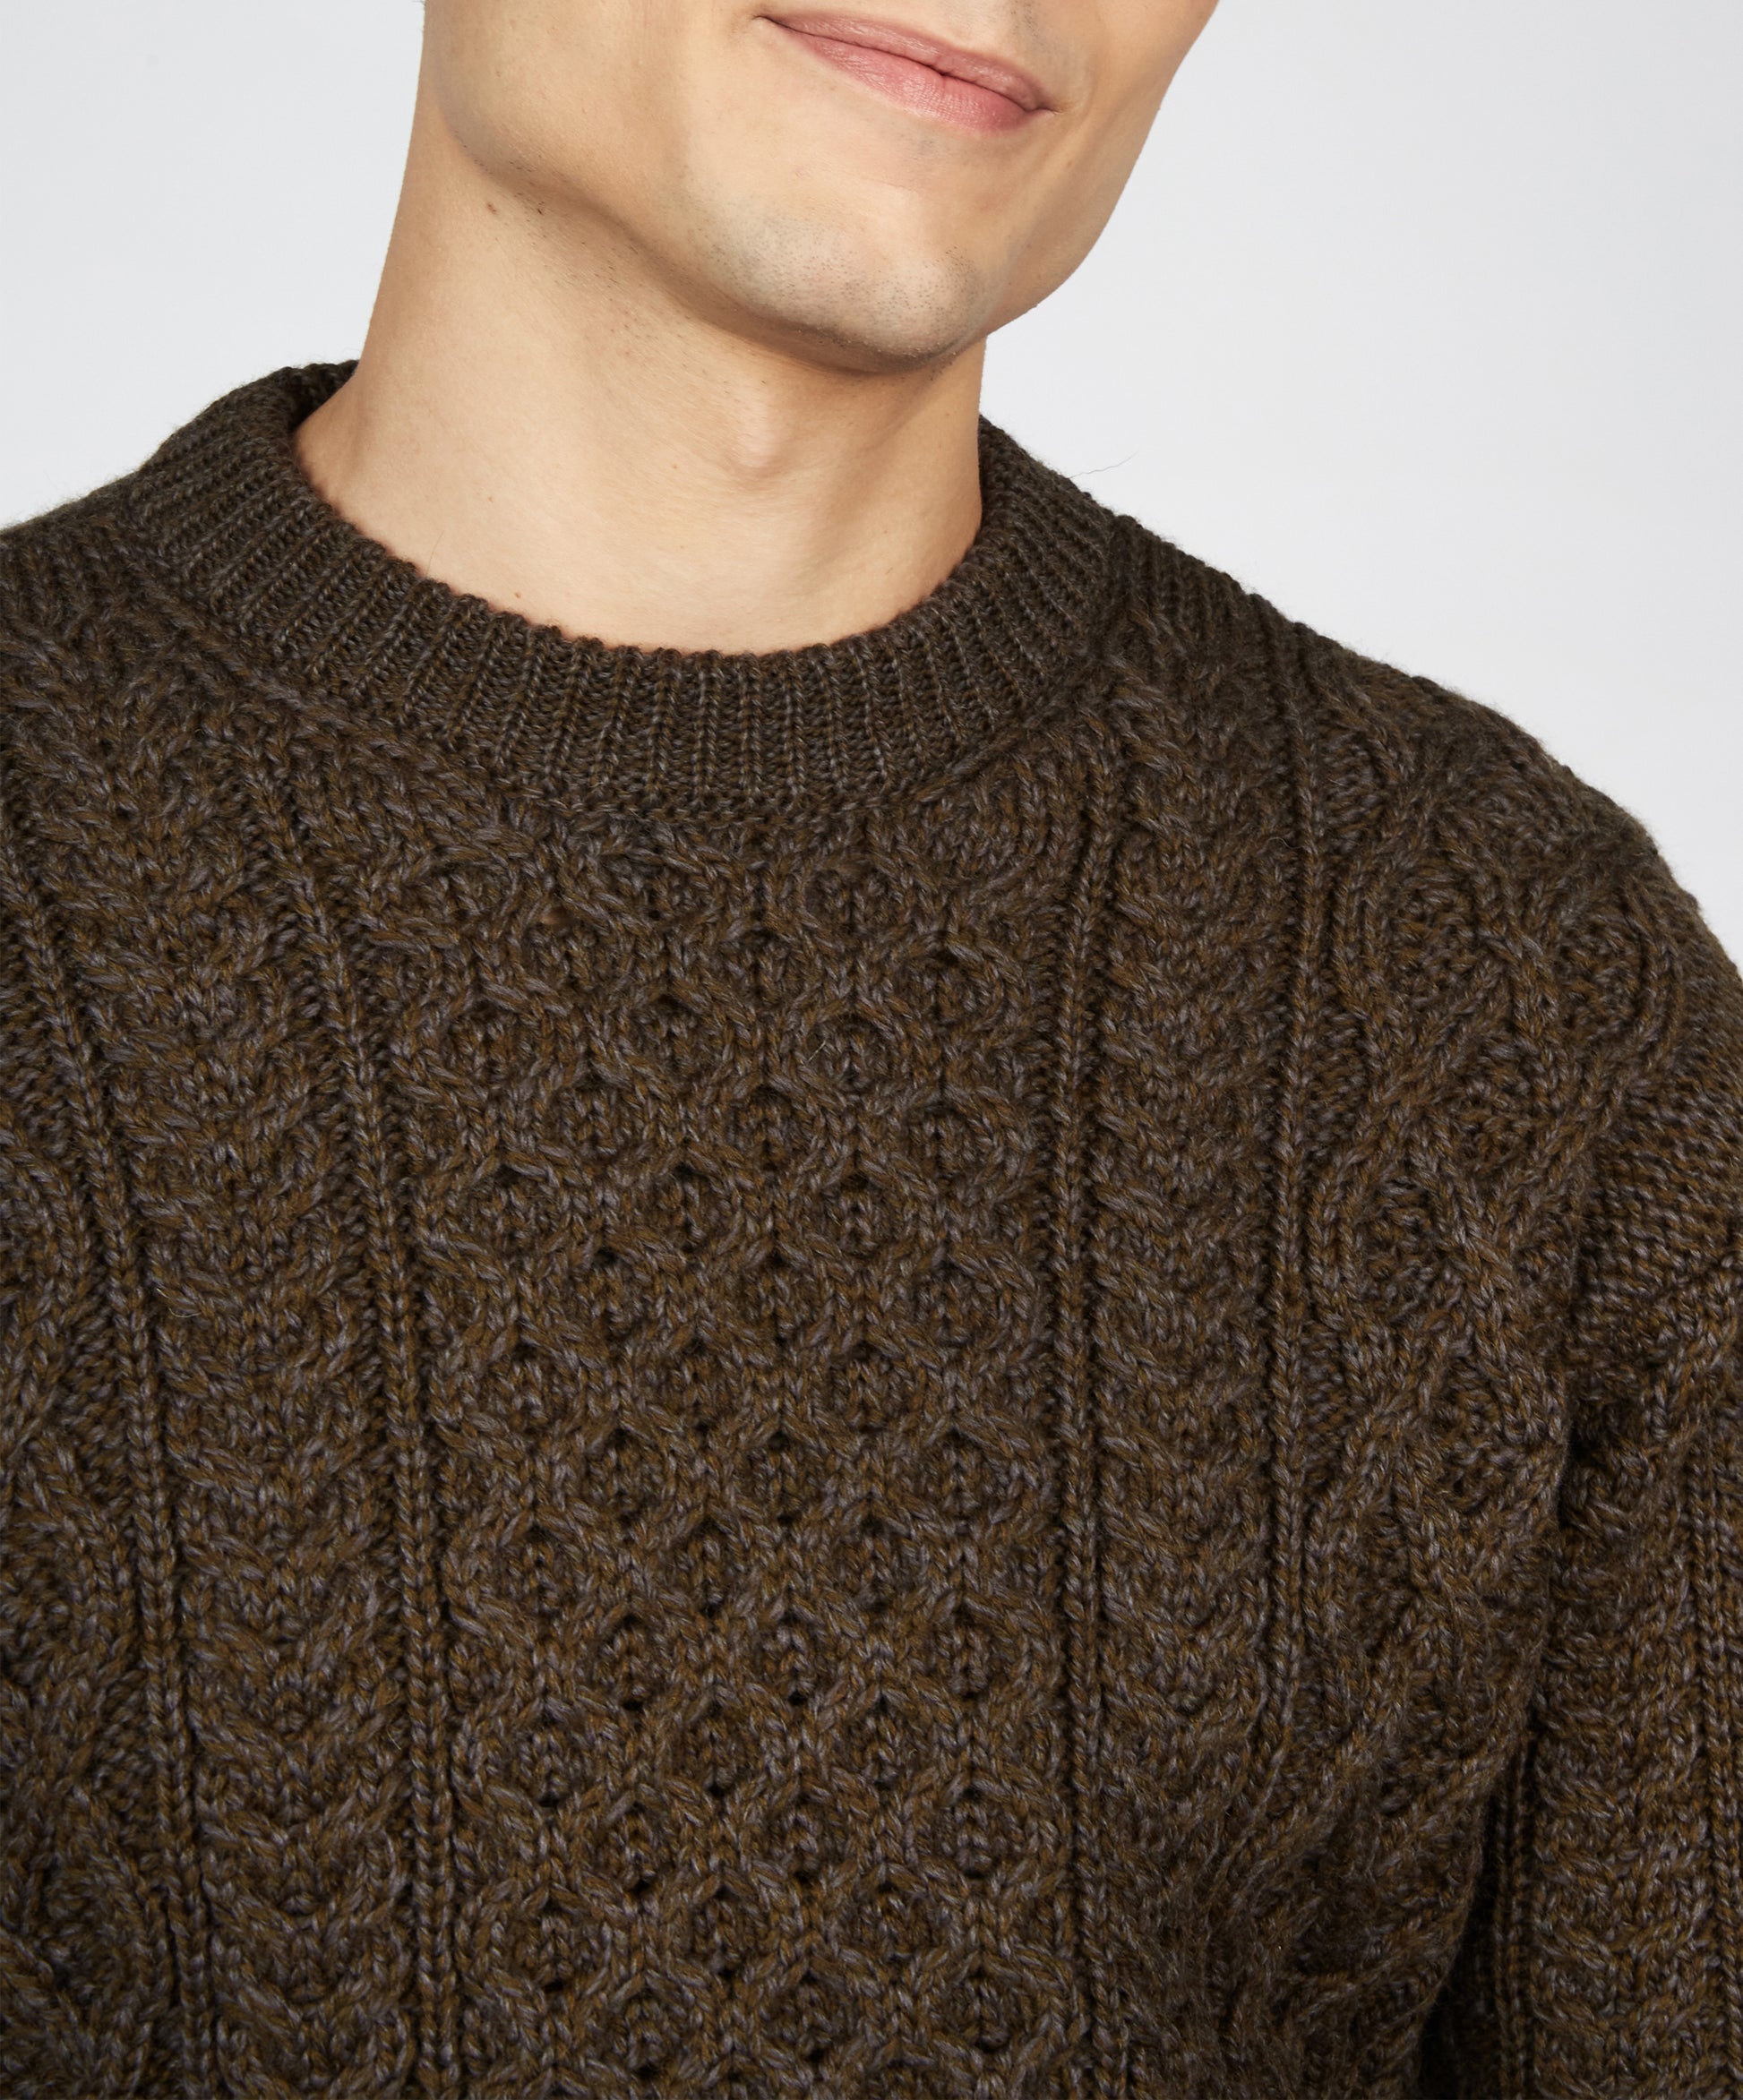 IrelandsEye Knitwear Blasket Honeycomb Stitch Mens Aran Sweater Forest Marl